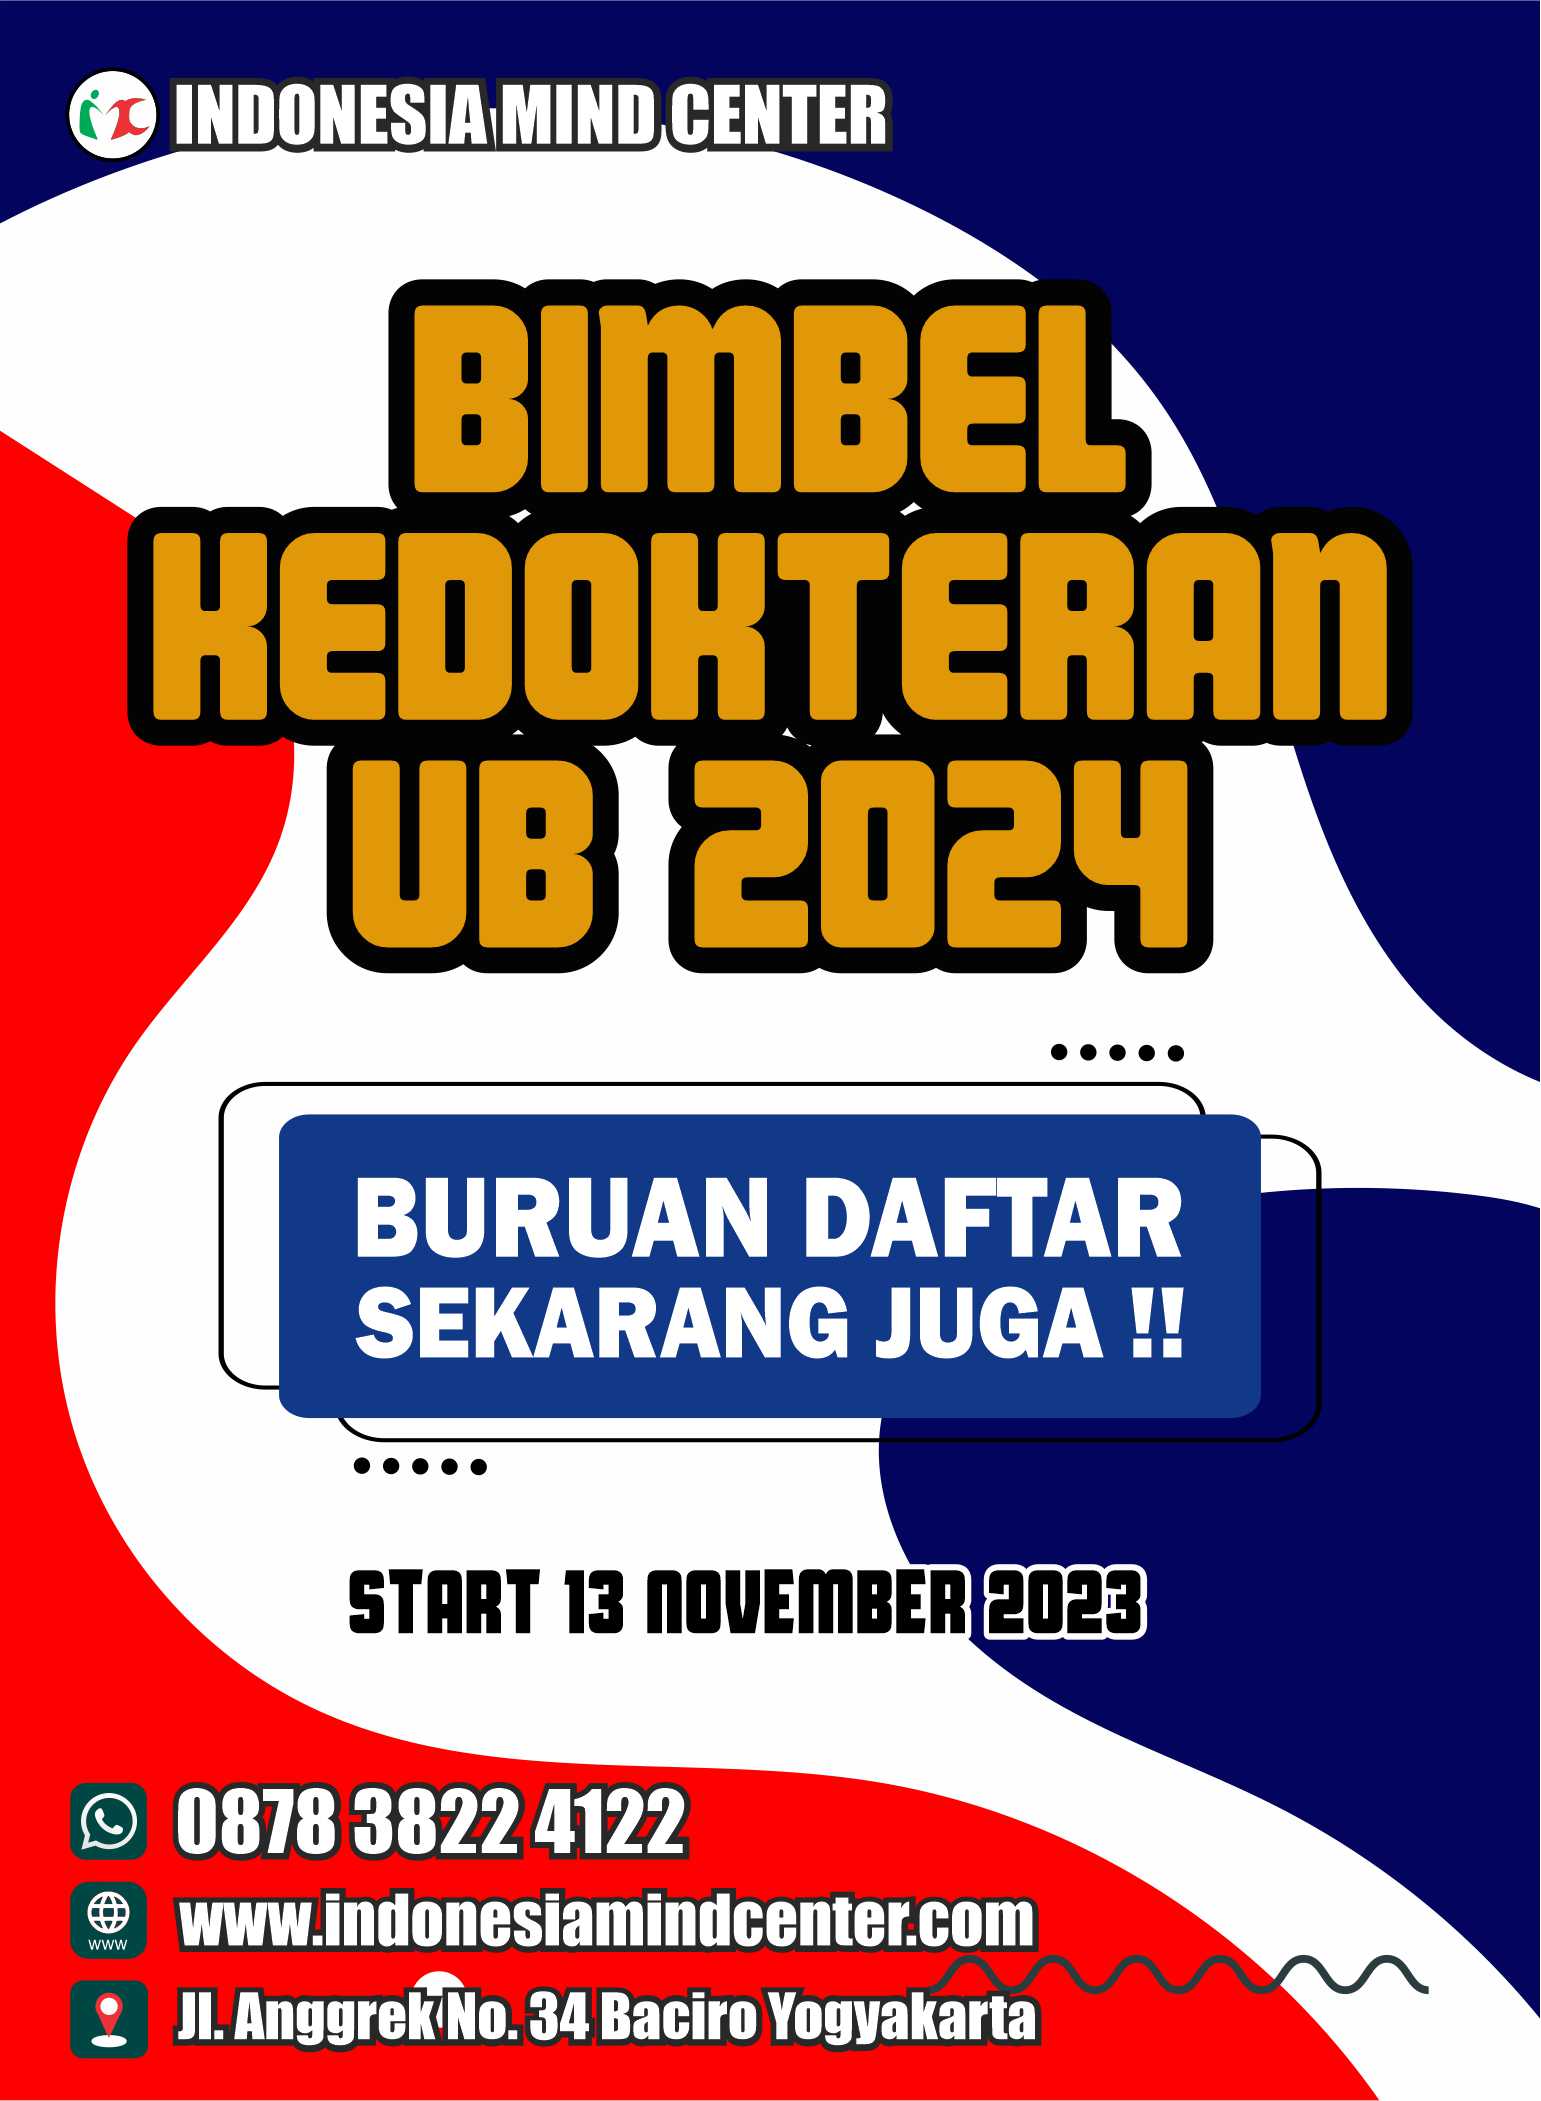 BIMBEL KEDOKTERAN UB 2024 START 13 NOVEMBER 2023